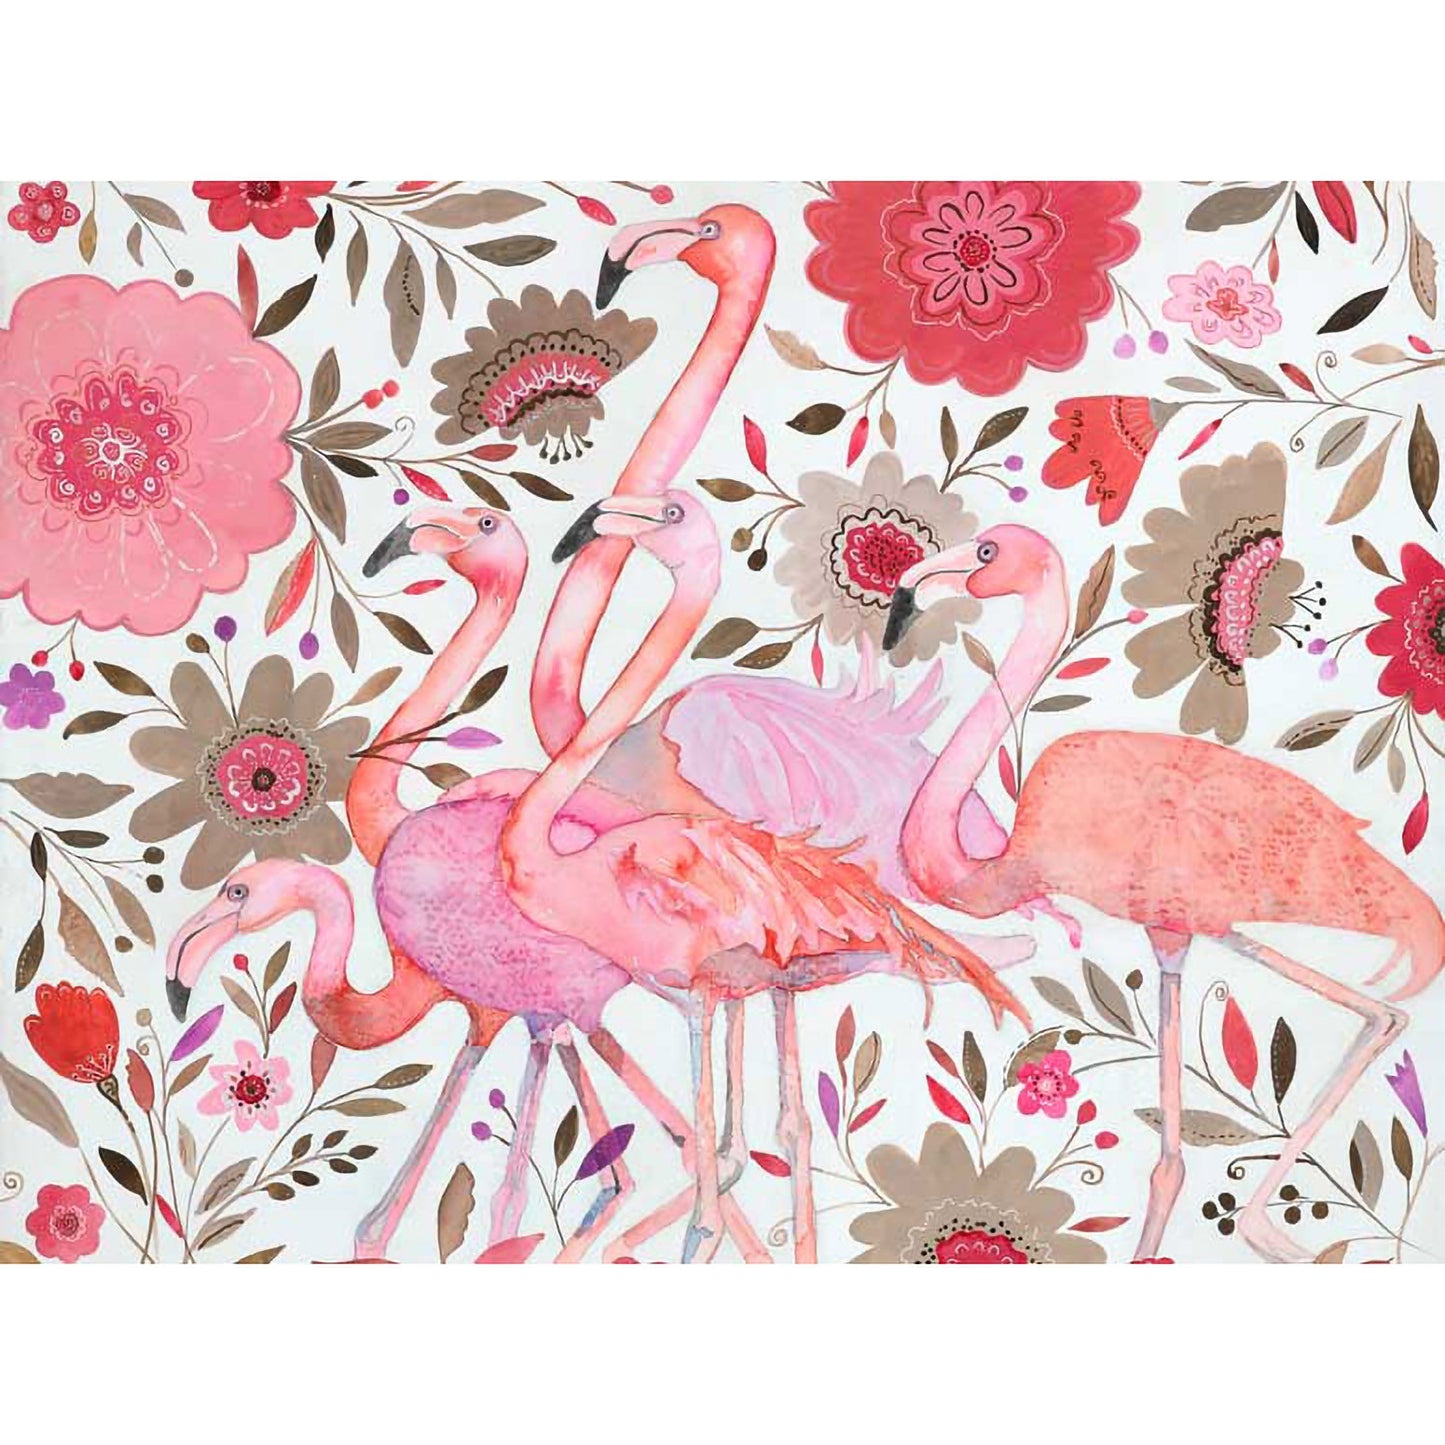 Flamingo Flock In Flowers Canvas Wall Art